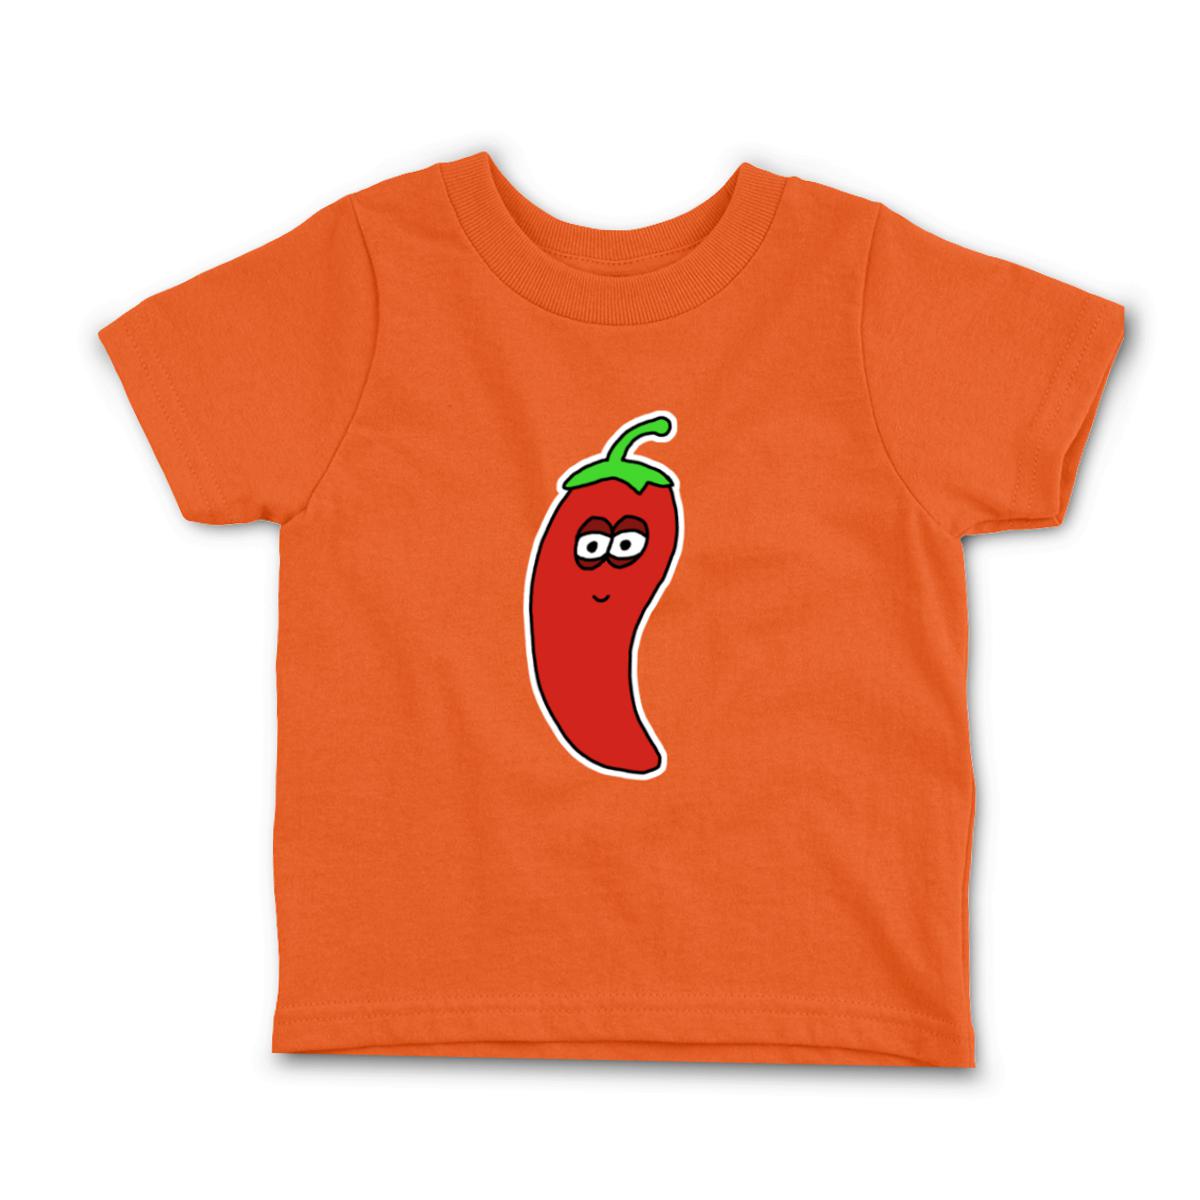 Chili Pepper Infant Tee 24M orange